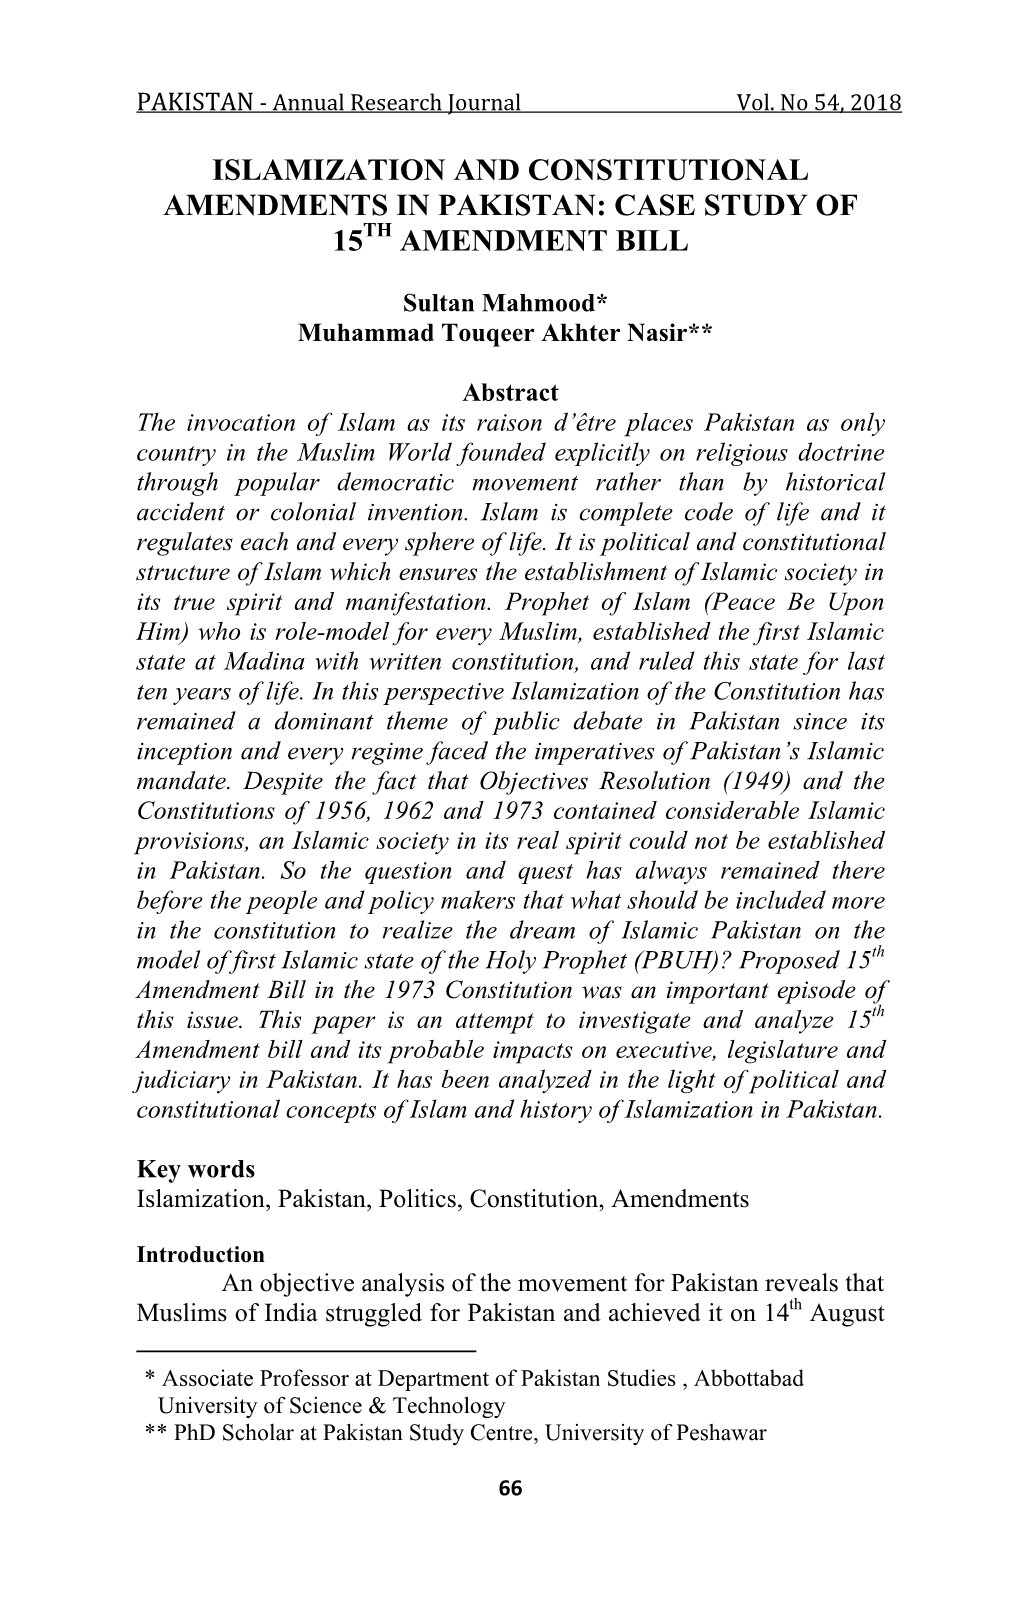 Islamization and Constitutional Amendments in Pakistan: Case Study of 15Th Amendment Bill